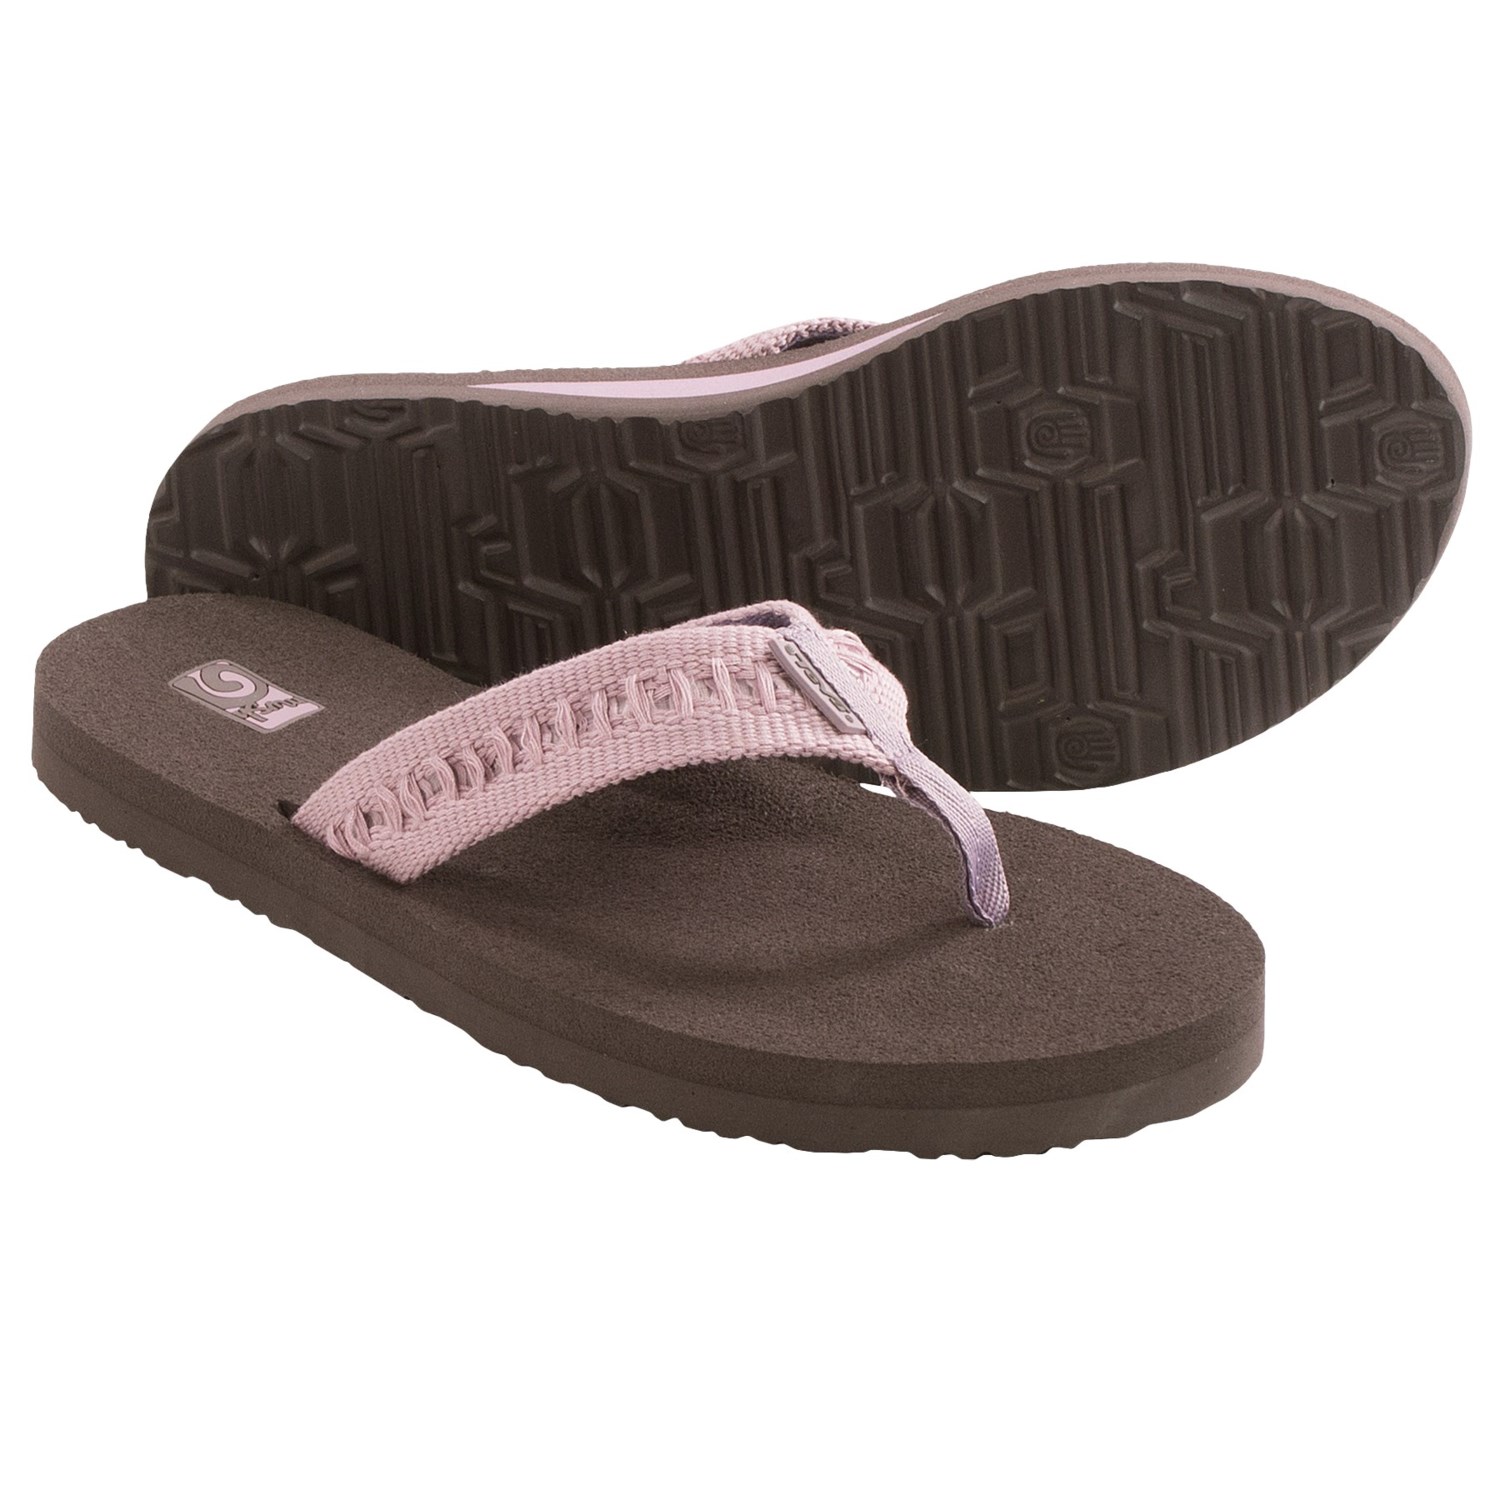 Teva Mush II Thong Sandals - Flip-Flops (For Women) in Chinchurro Sea Fog